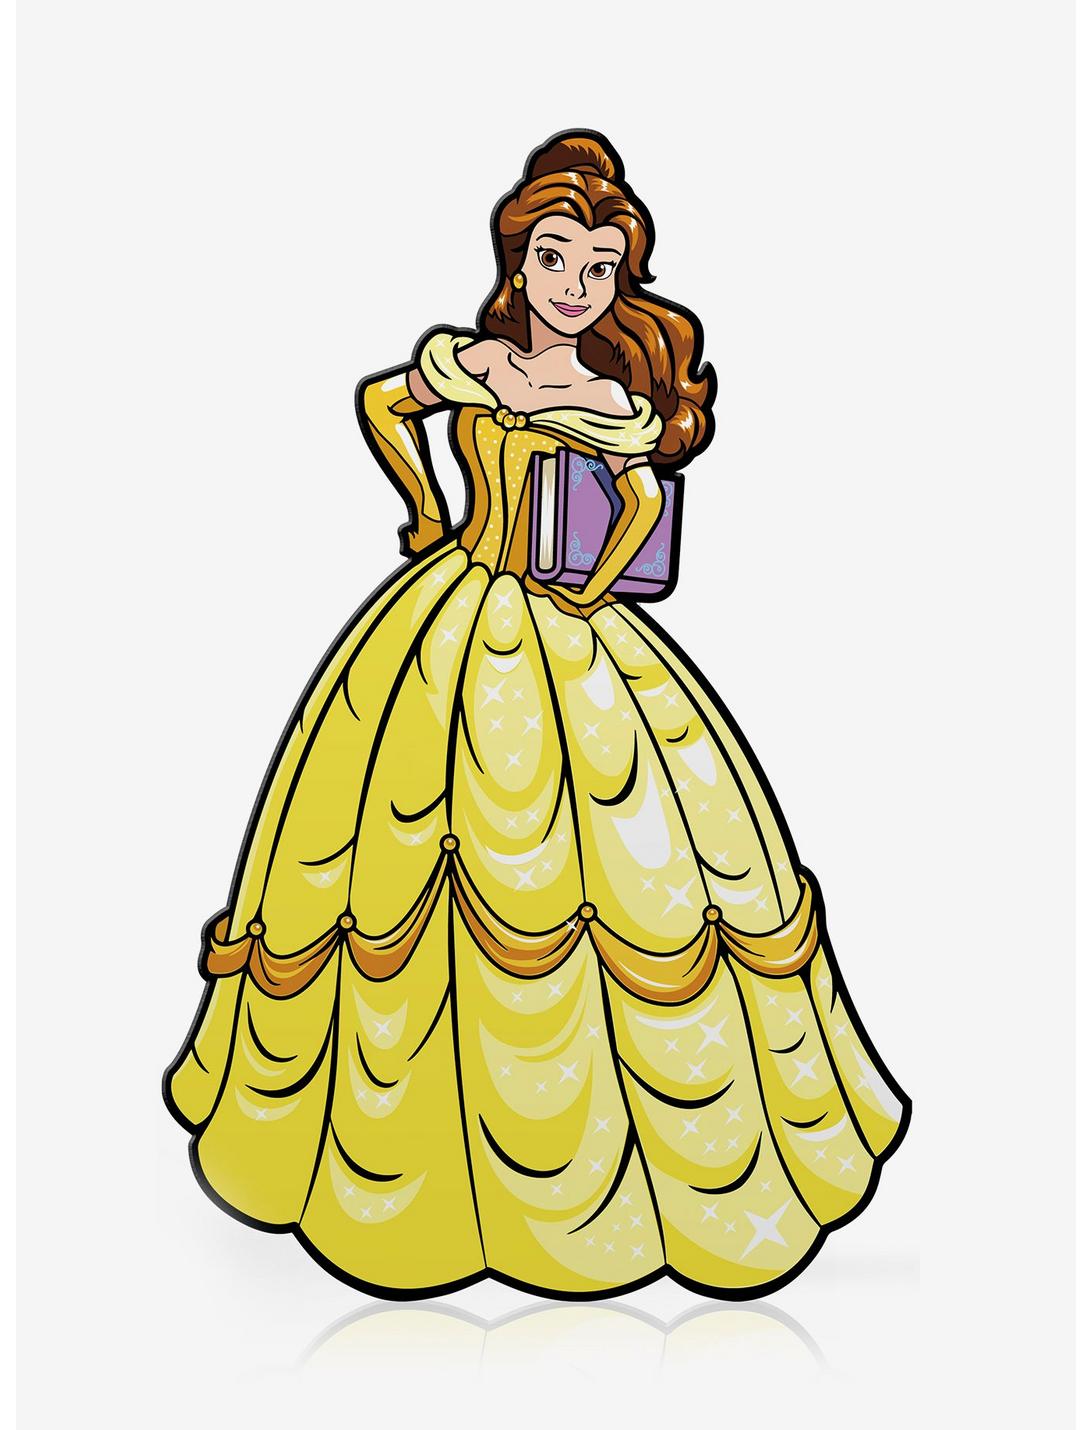 FiGPiN Disney Princess Belle Collectible Enamel Pin, , hi-res